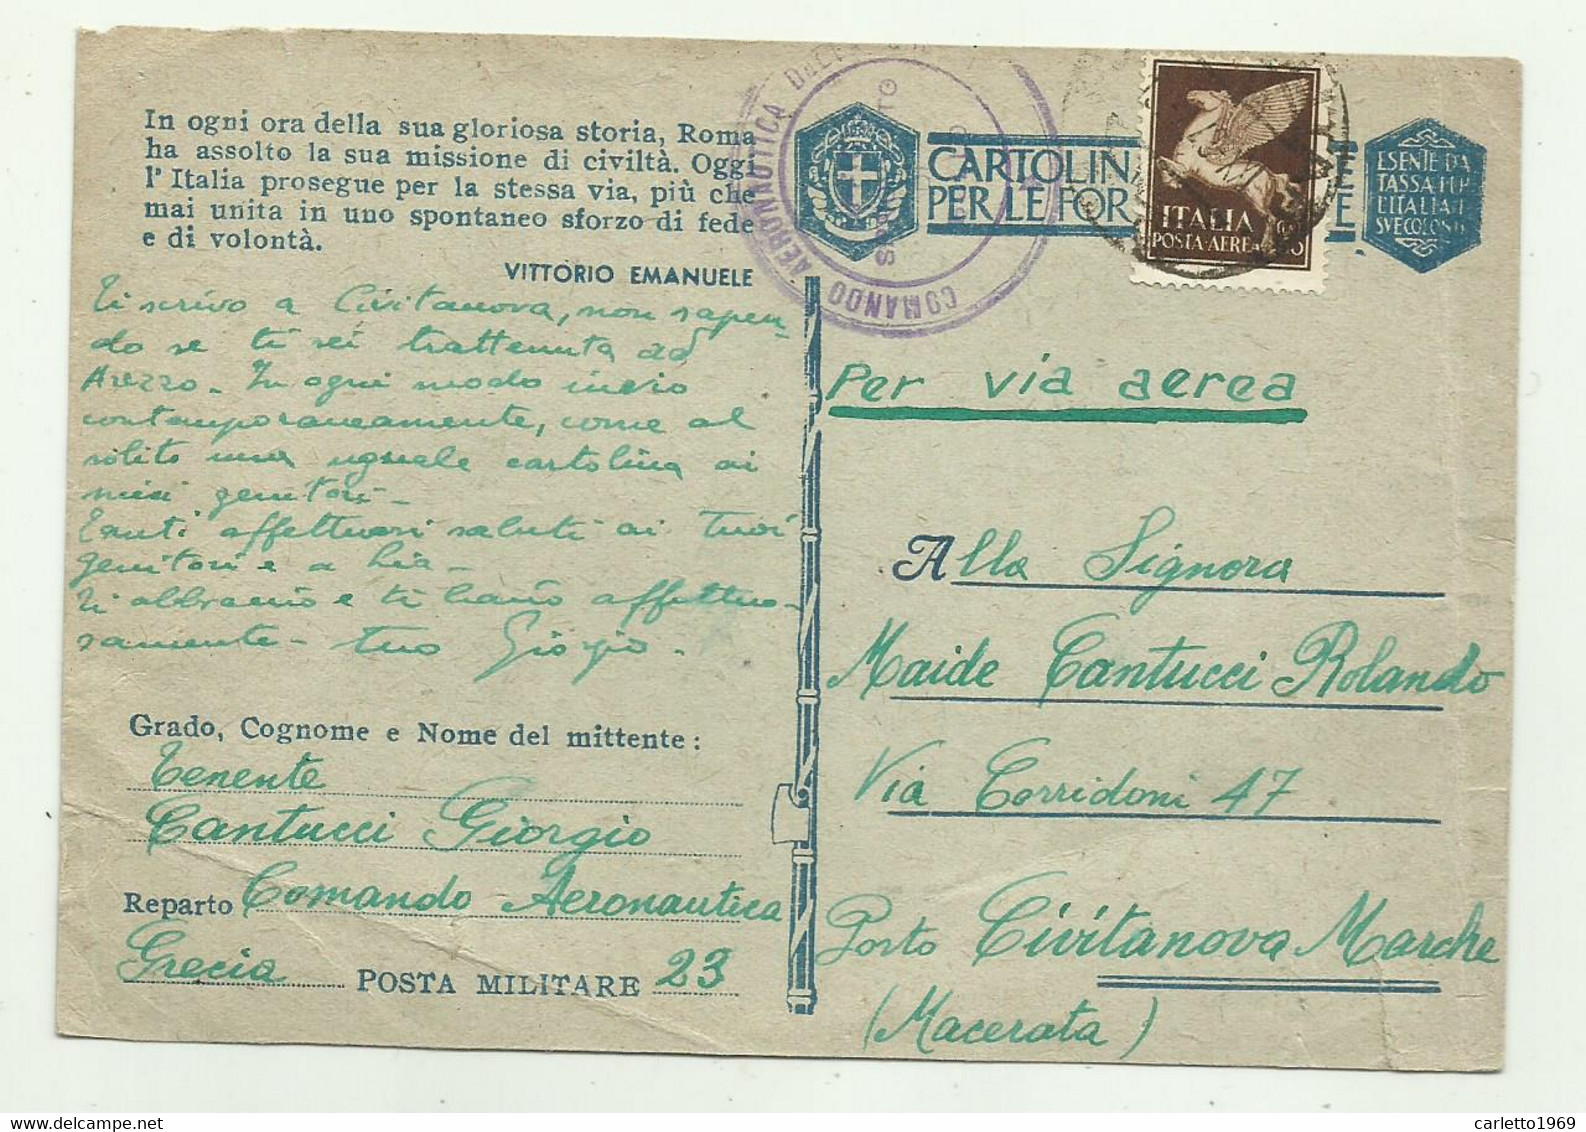 CARTOLINA FORZE ARMATE - COMANDO AERONAUTICA GRECIA PM 23 VIA AEREA 1943 - Entiers Postaux